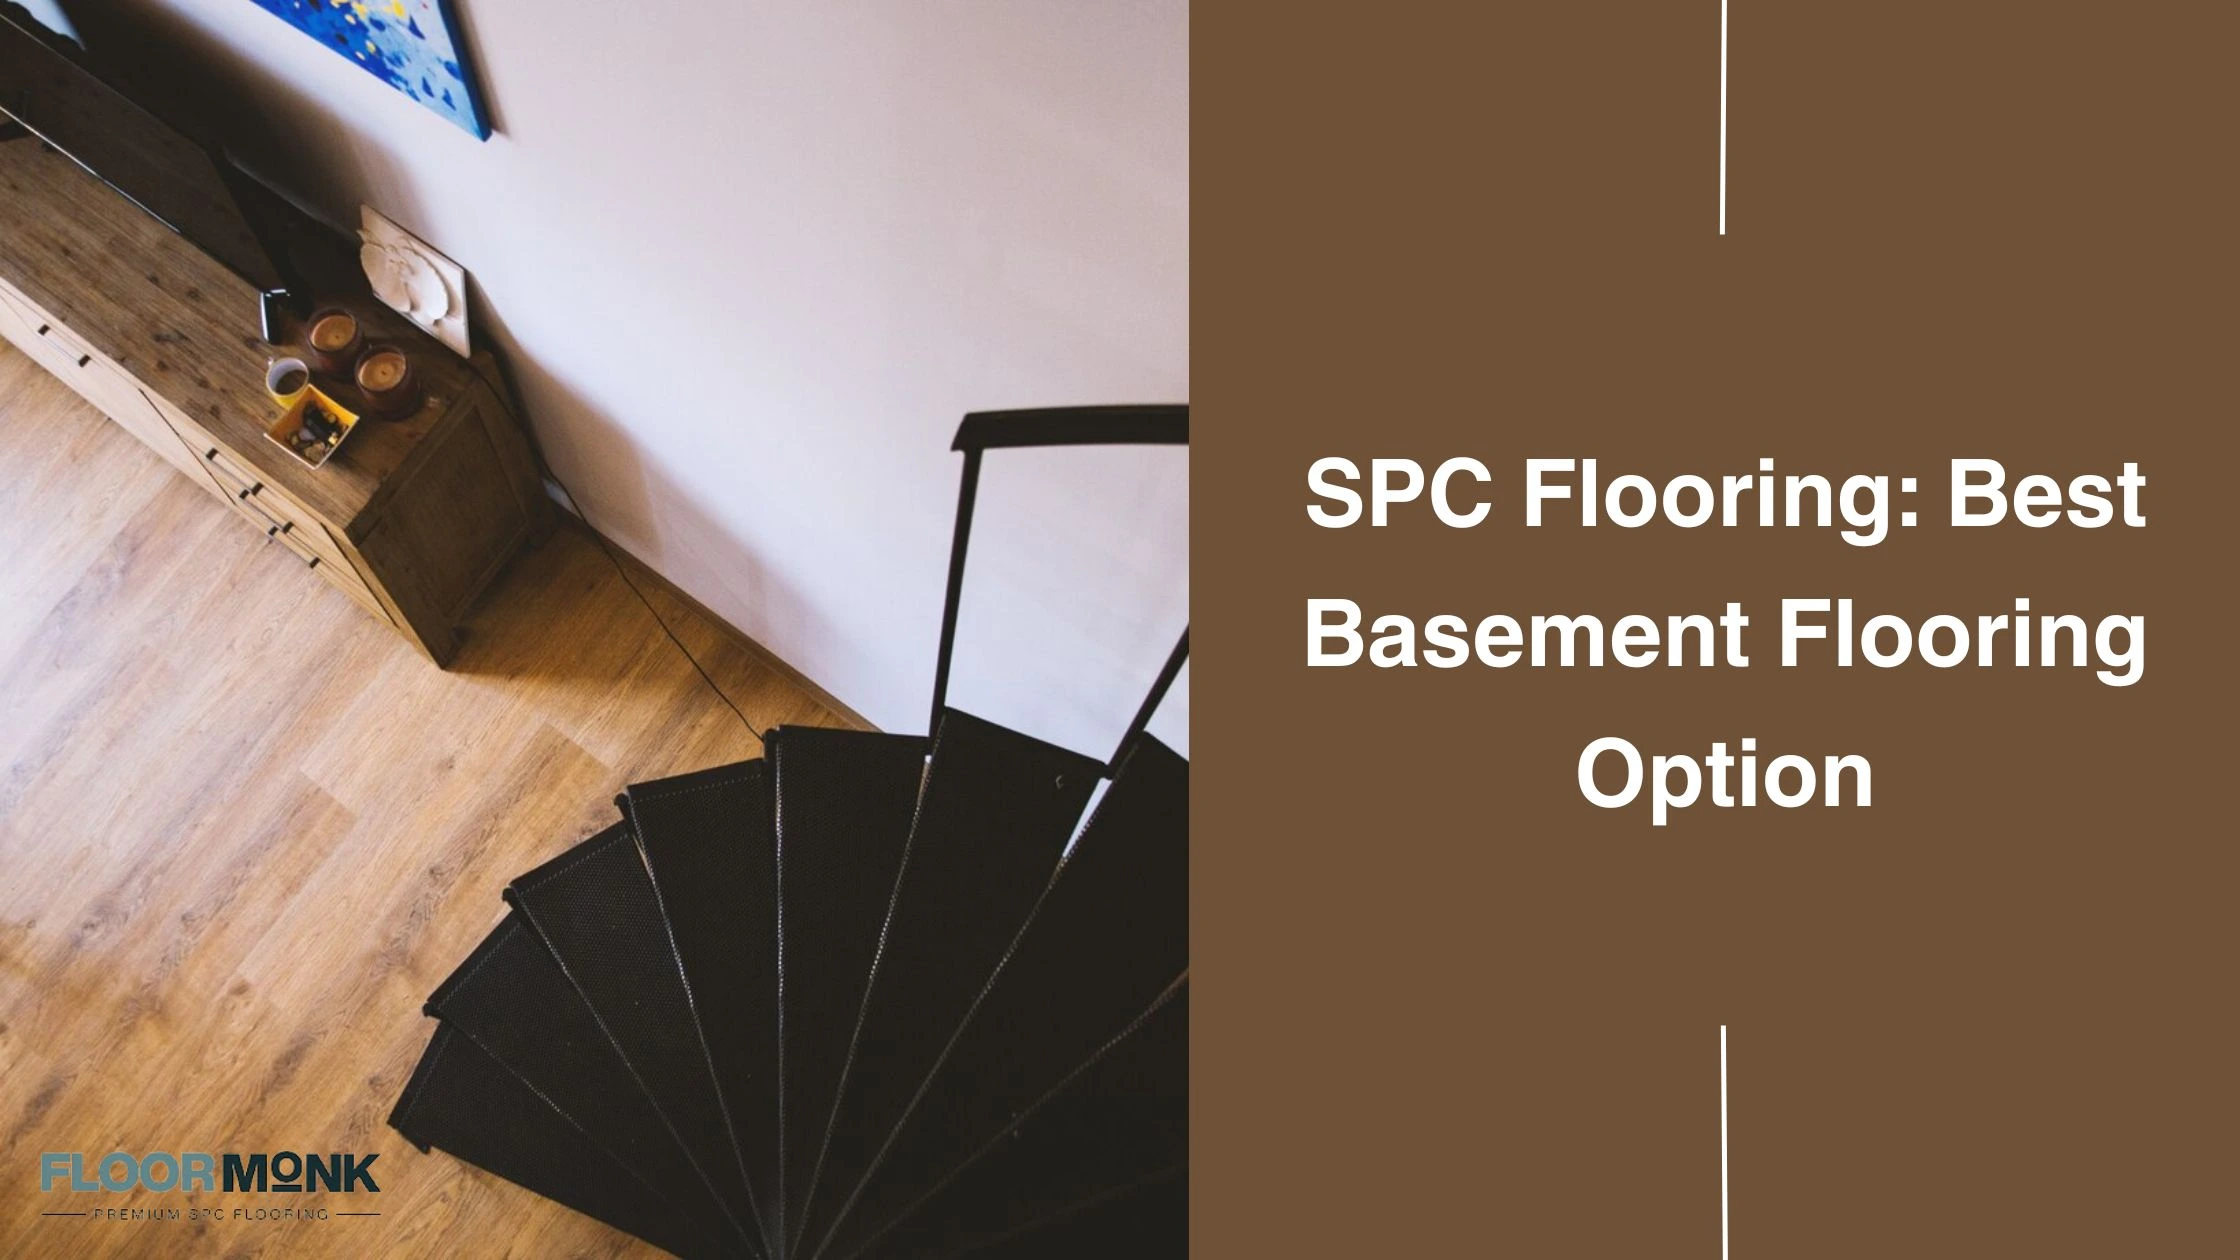 SPC Flooring: Best Basement Flooring Option